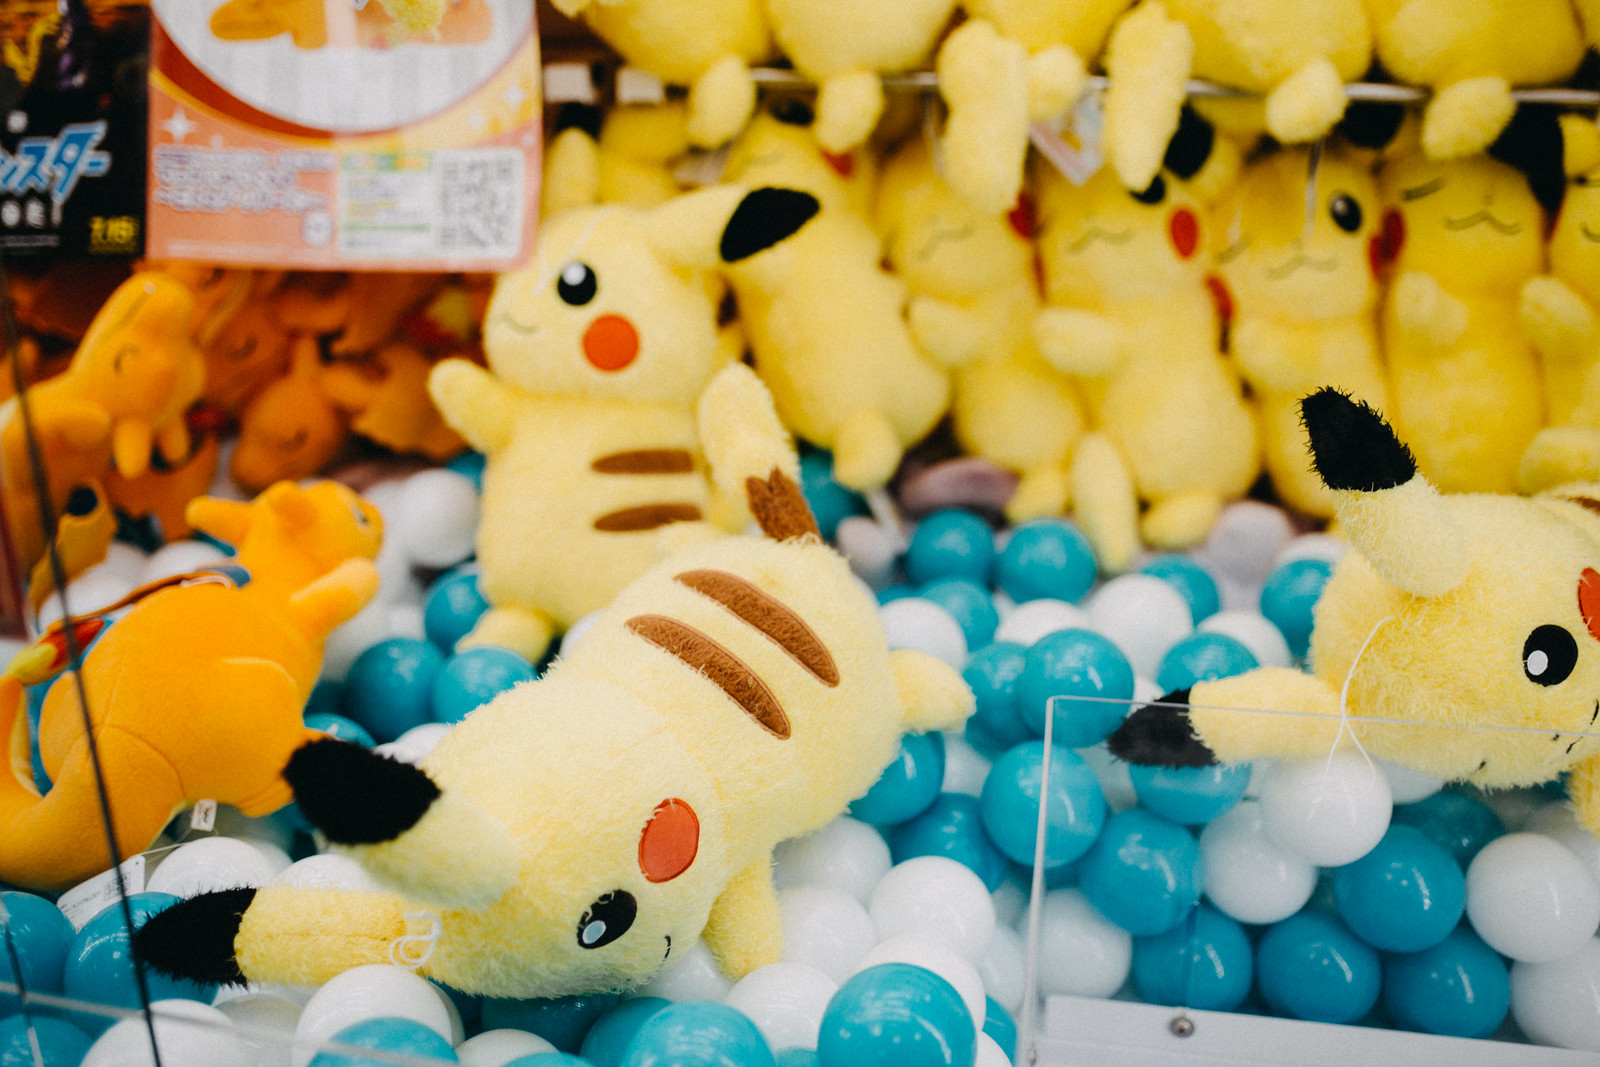 Stuffed pikachu in akihabara arcade in tokyo japan